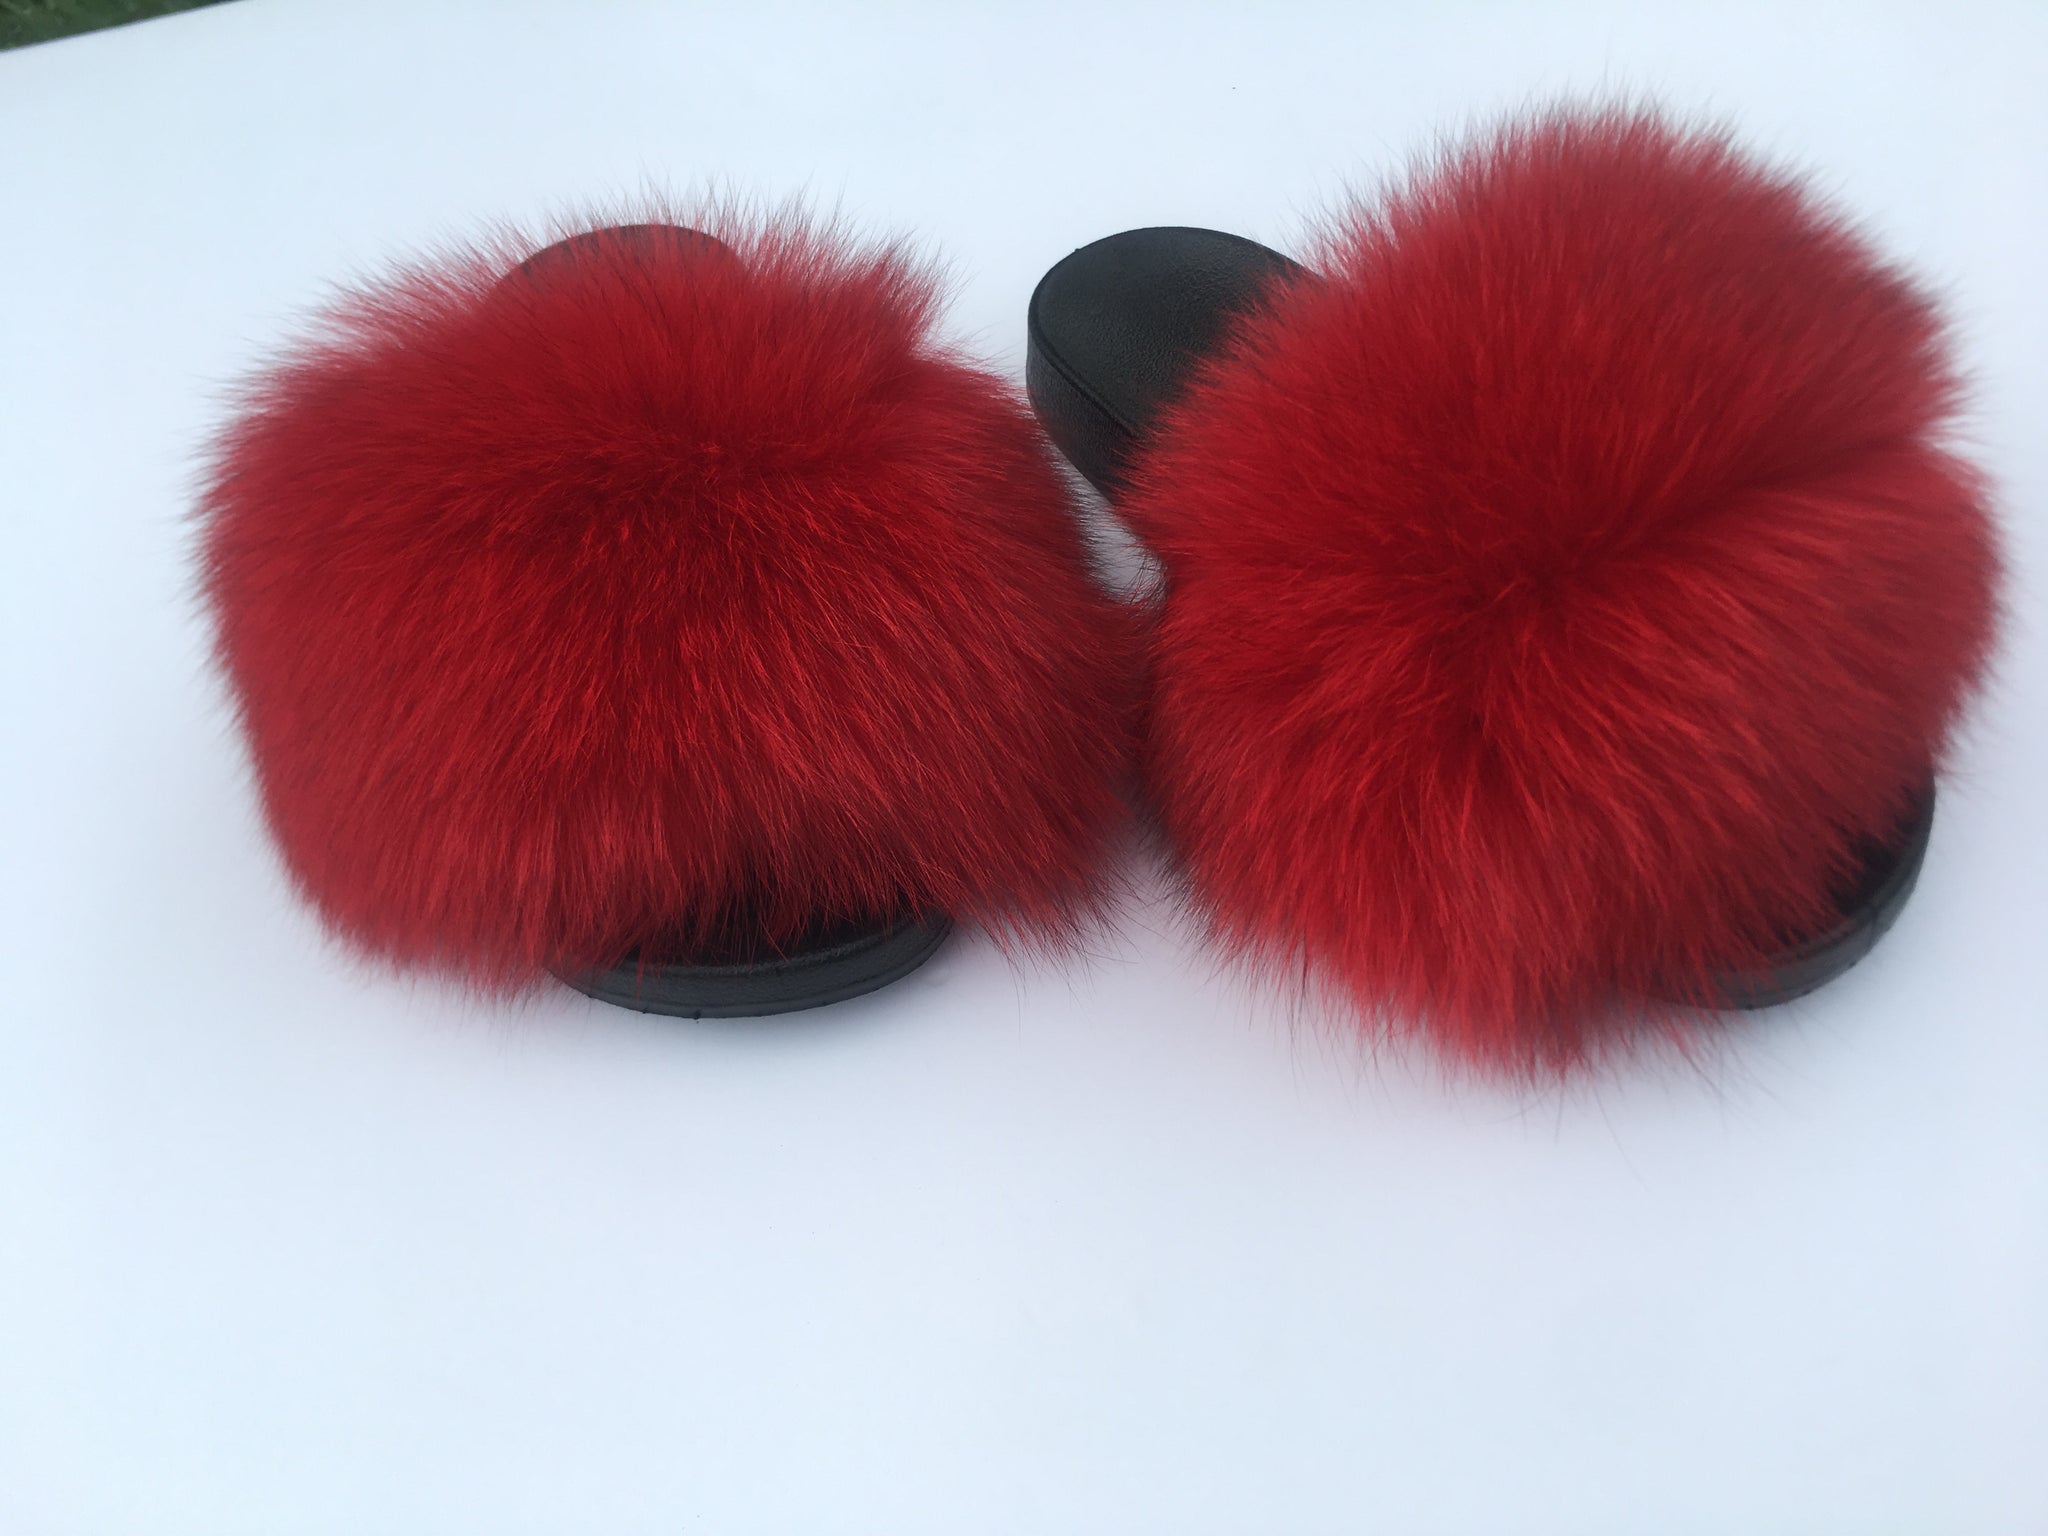 red faux fur slides